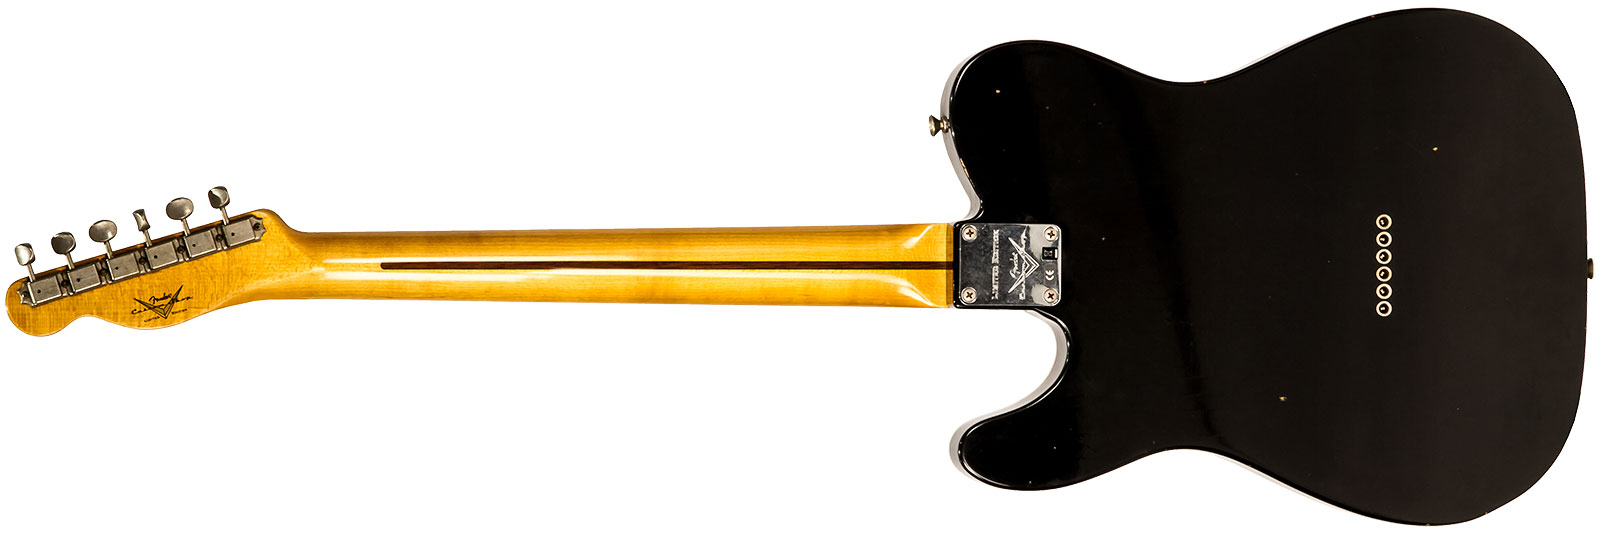 Fender Custom Shop Double Esquire/tele Custom 2s Ht Mn #r97434 - Journeyman Relic Aged Pink Paisley - Semi hollow elektriche gitaar - Variation 1